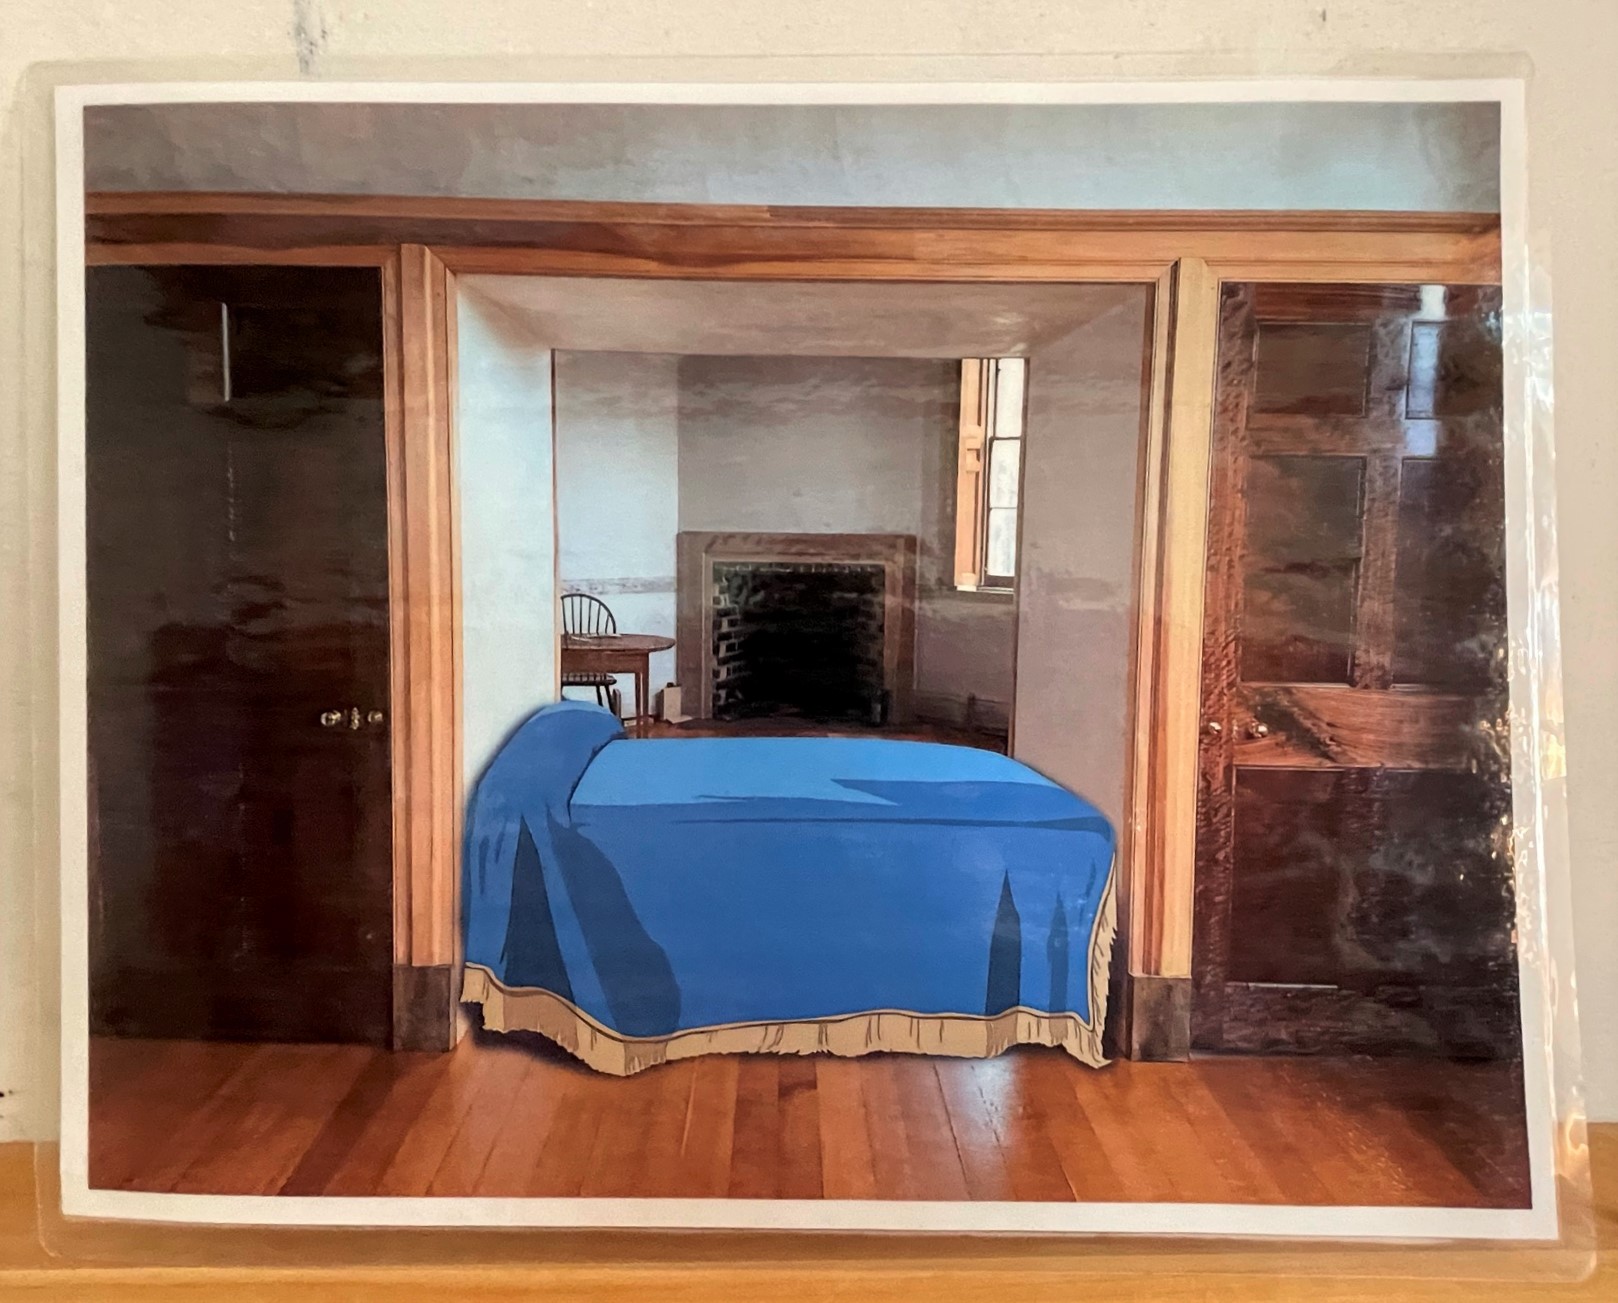 Thomas Jefferson's bedroom at Poplar Forest